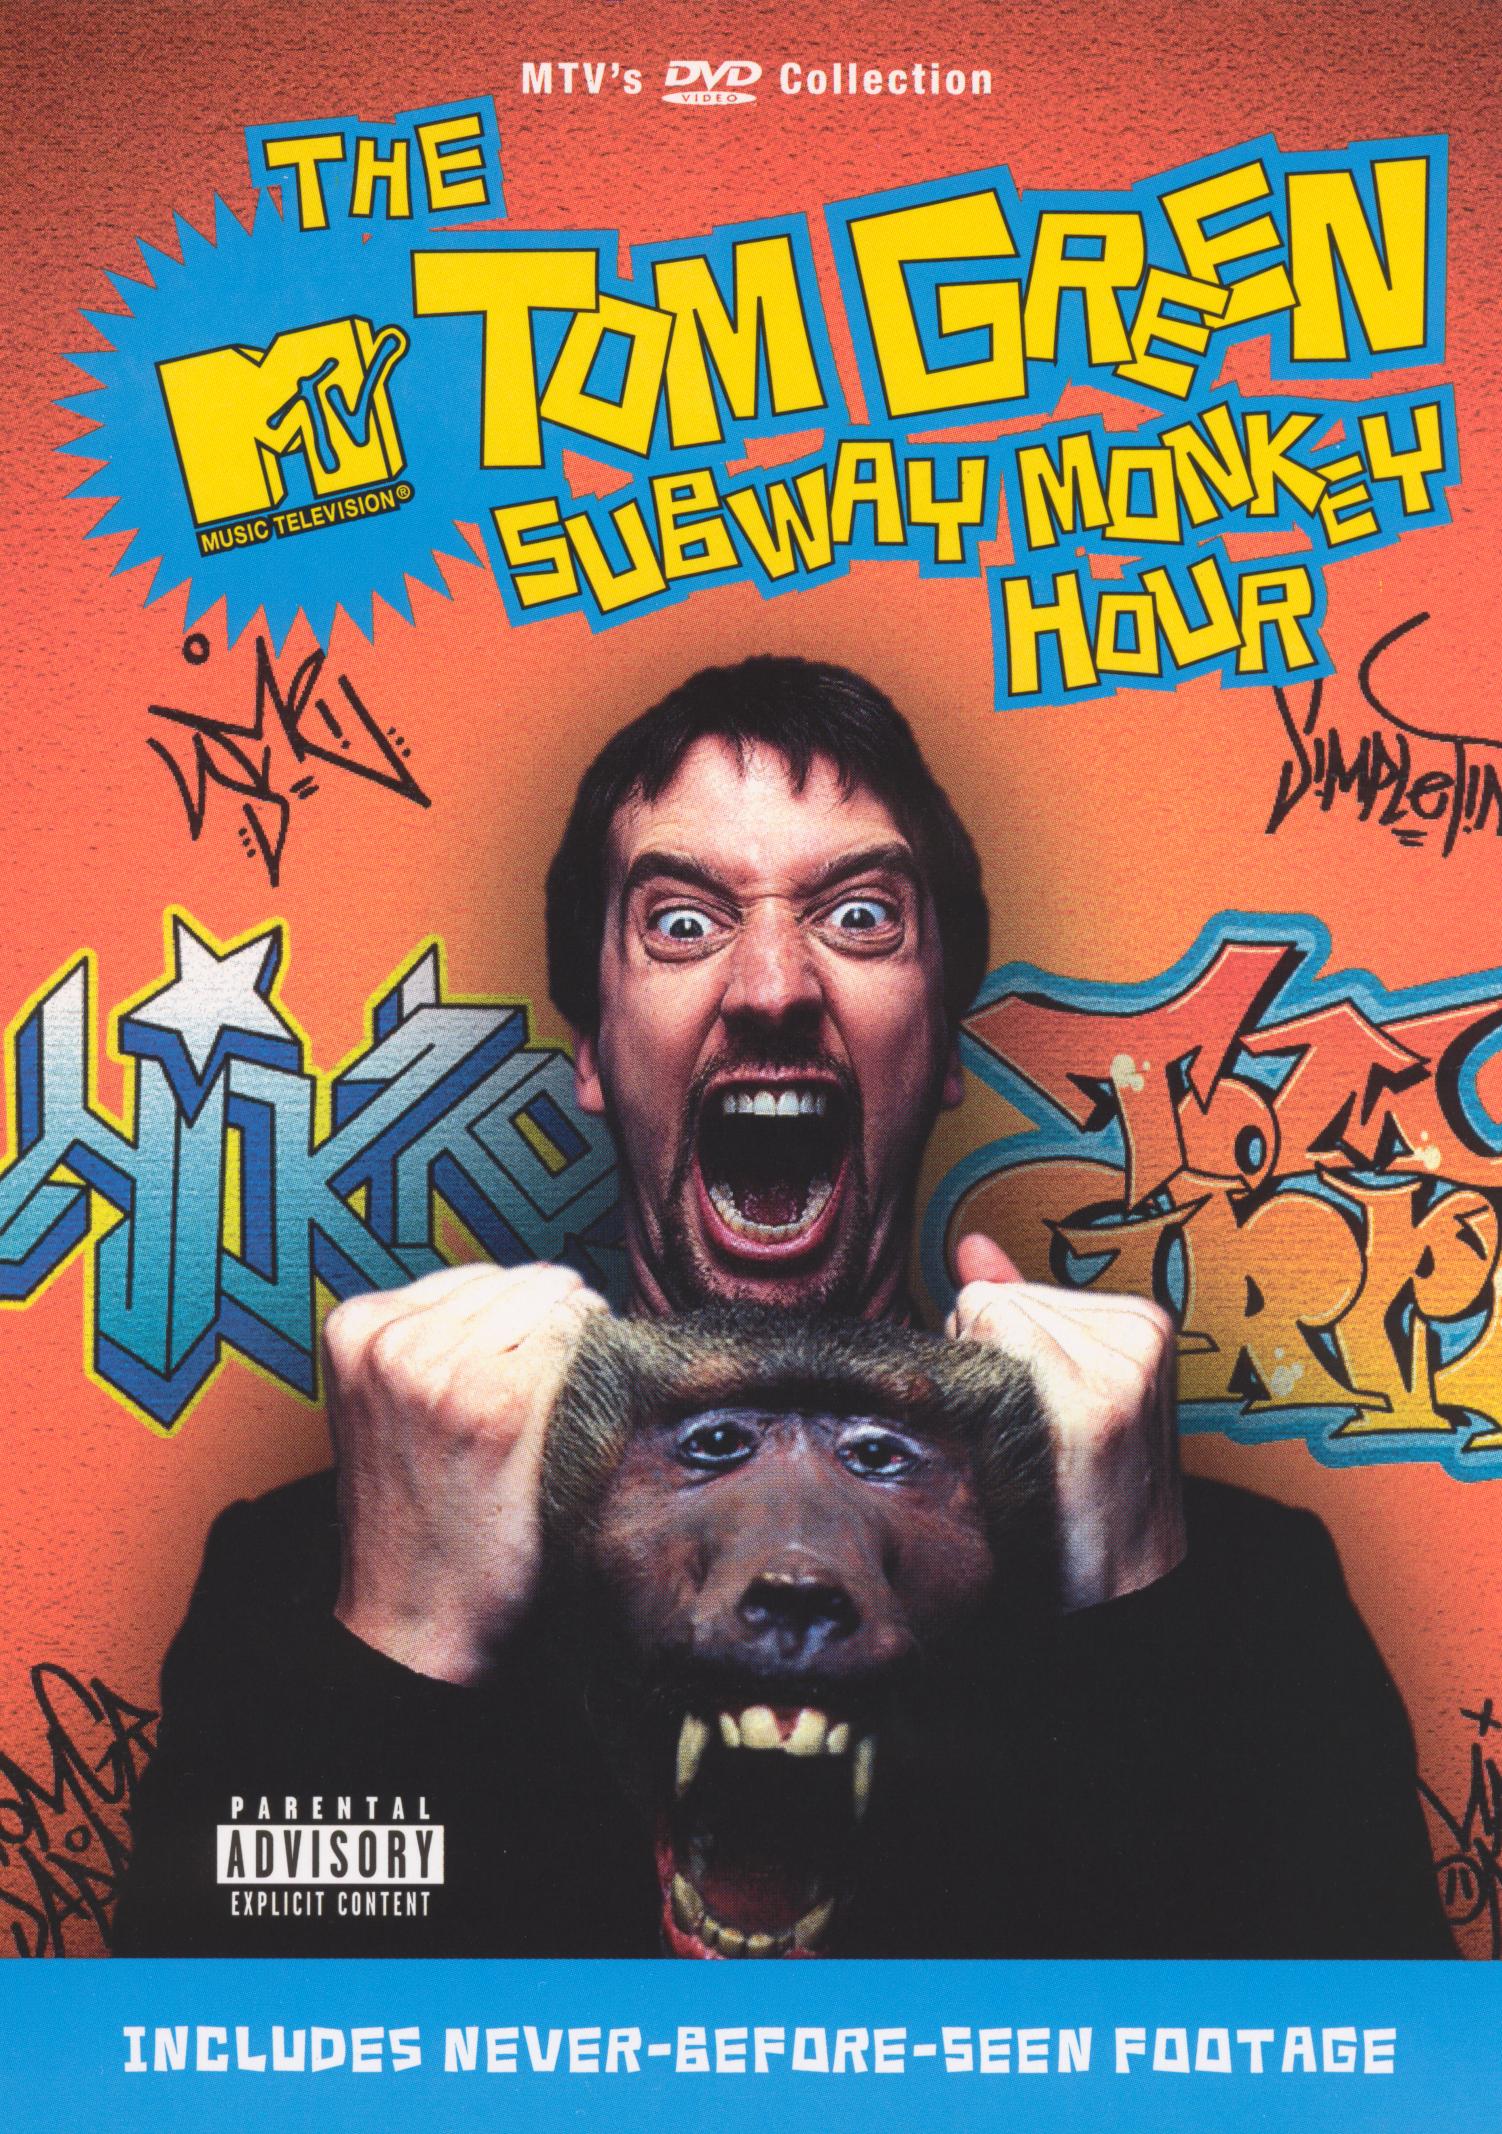 Tom Green Show: Subway Monkey Hour cover art